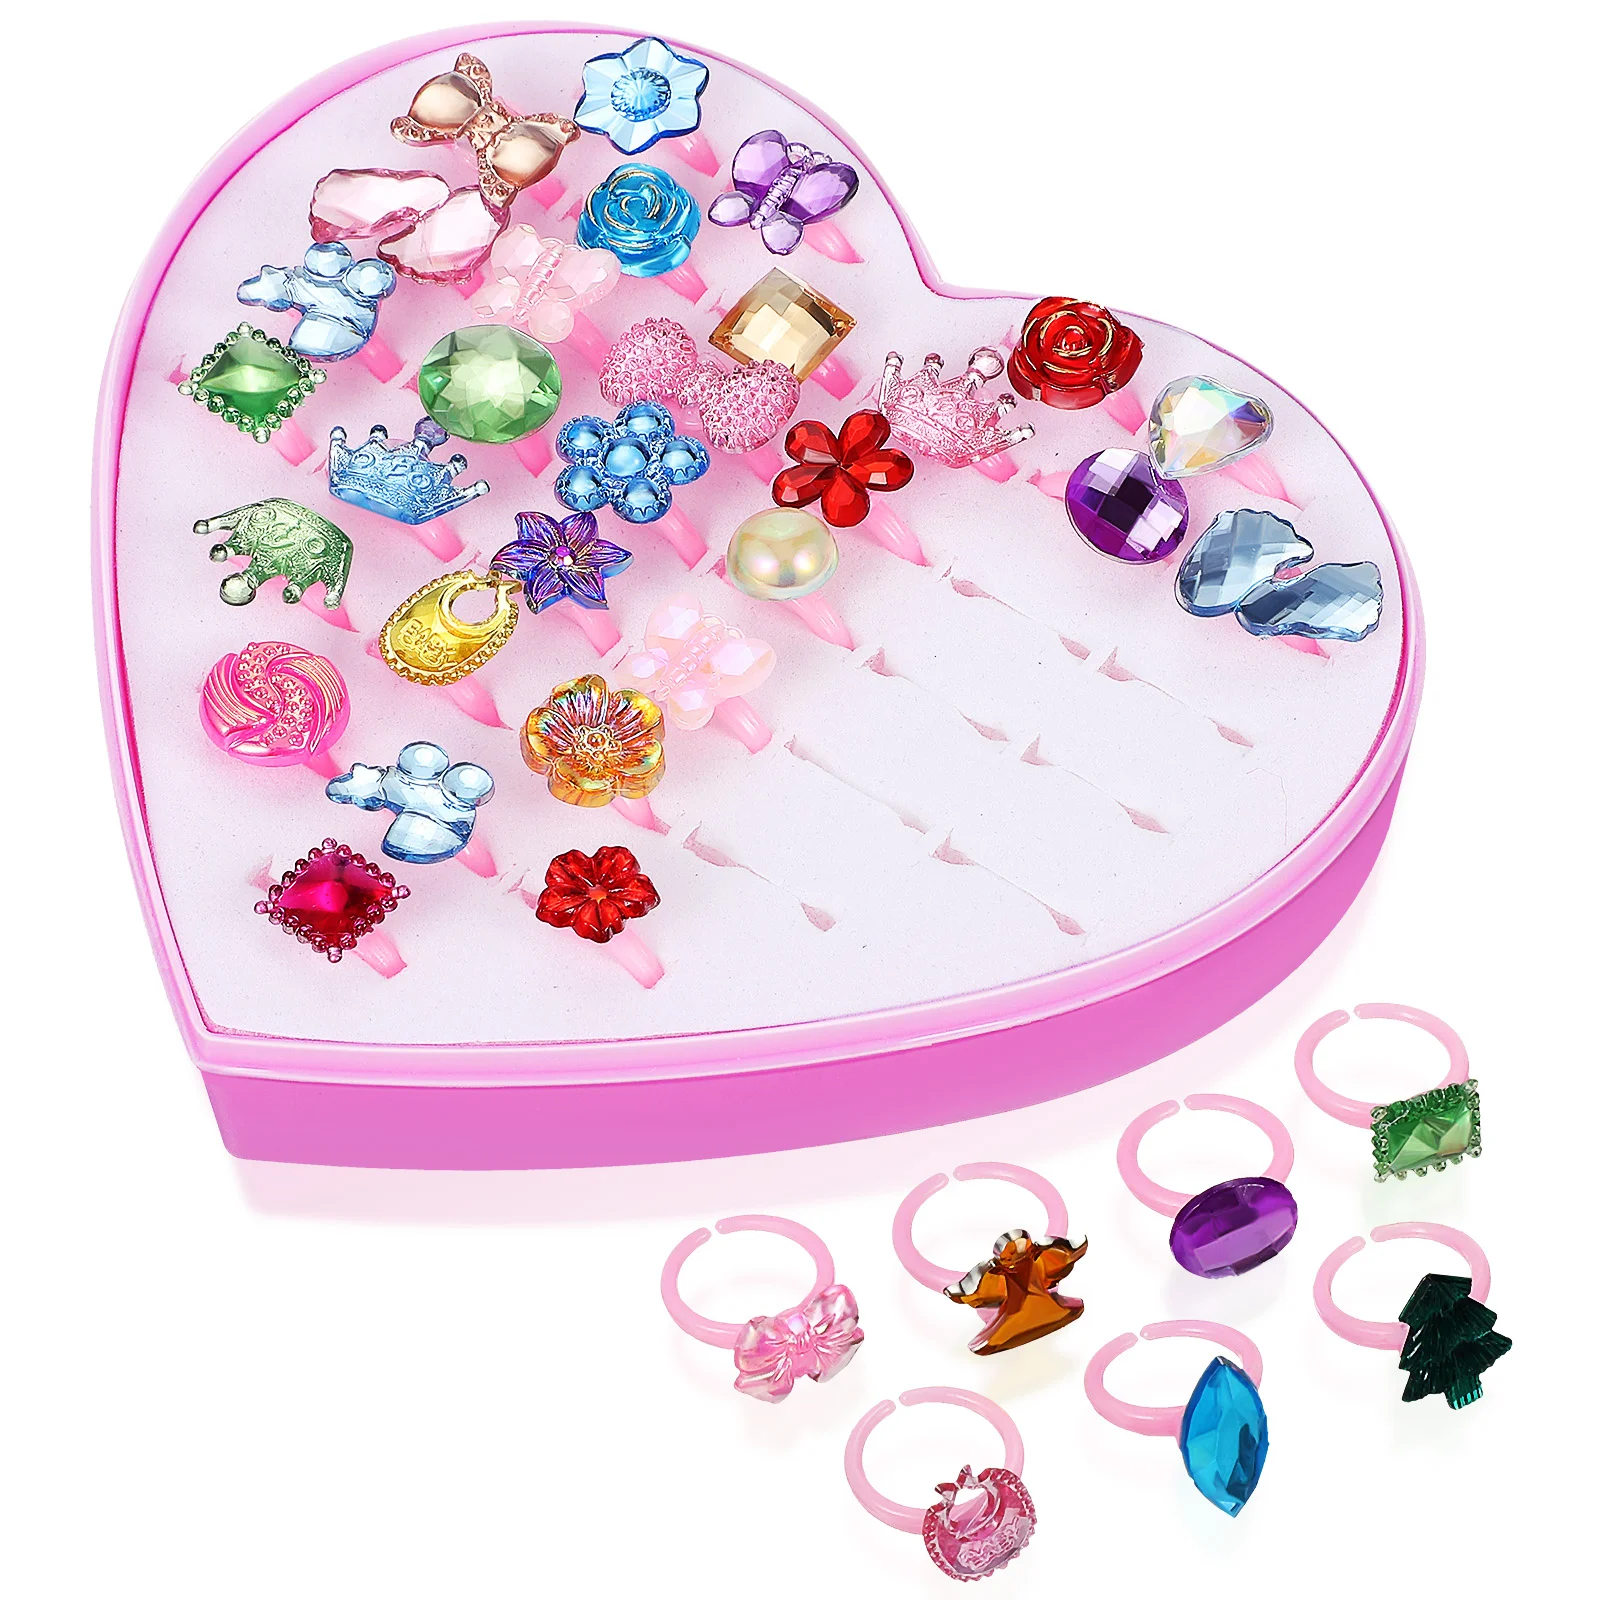 

Girl's Crystal Ring Jewelry Adjustable Rings Kids Dress Up Children Toddler Girls Princess